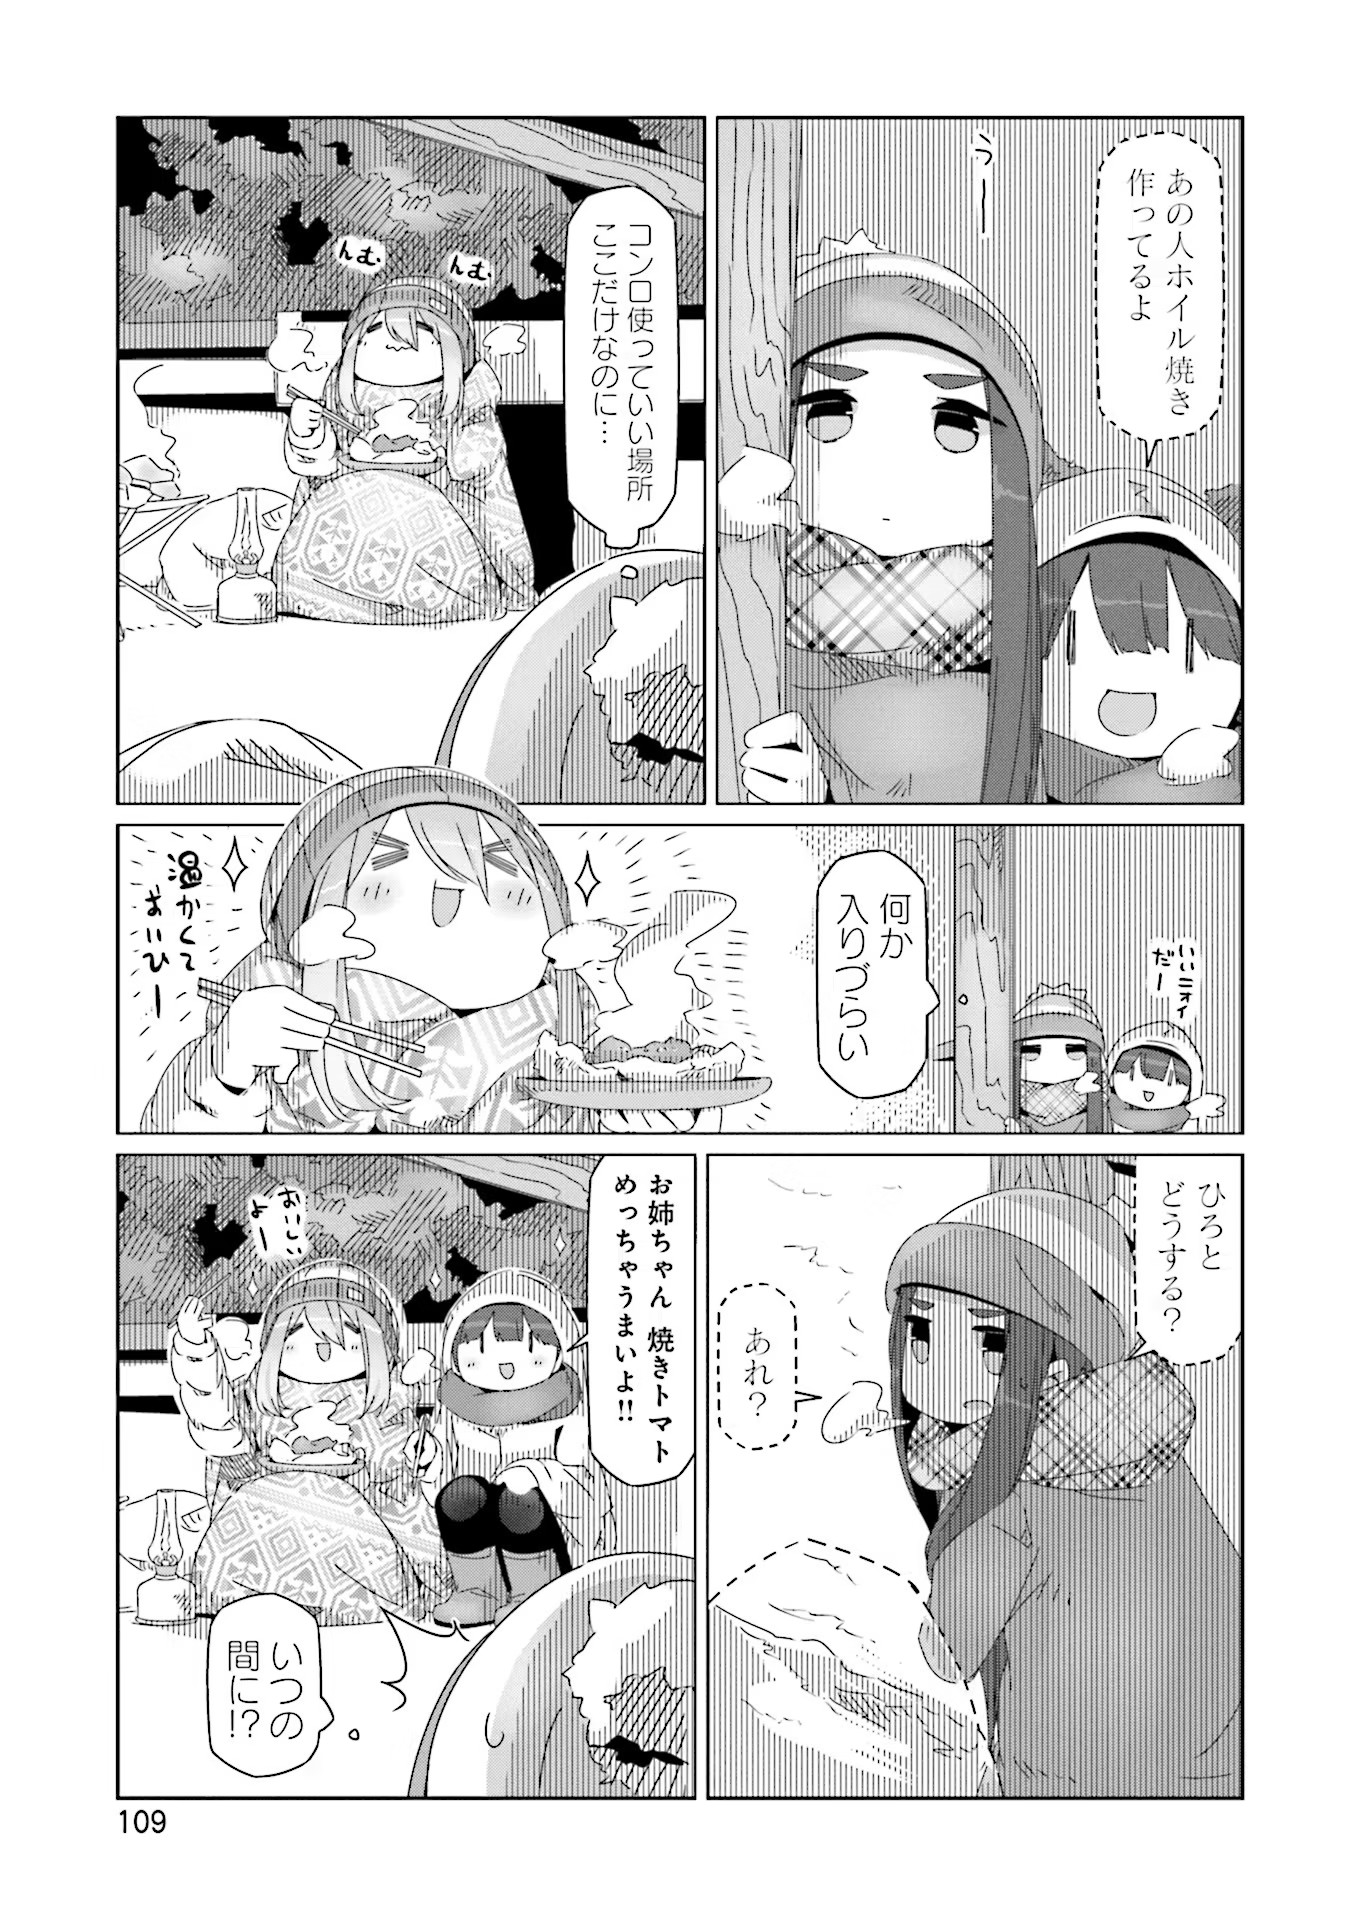 Yuru Camp - Chapter 39 - Page 3